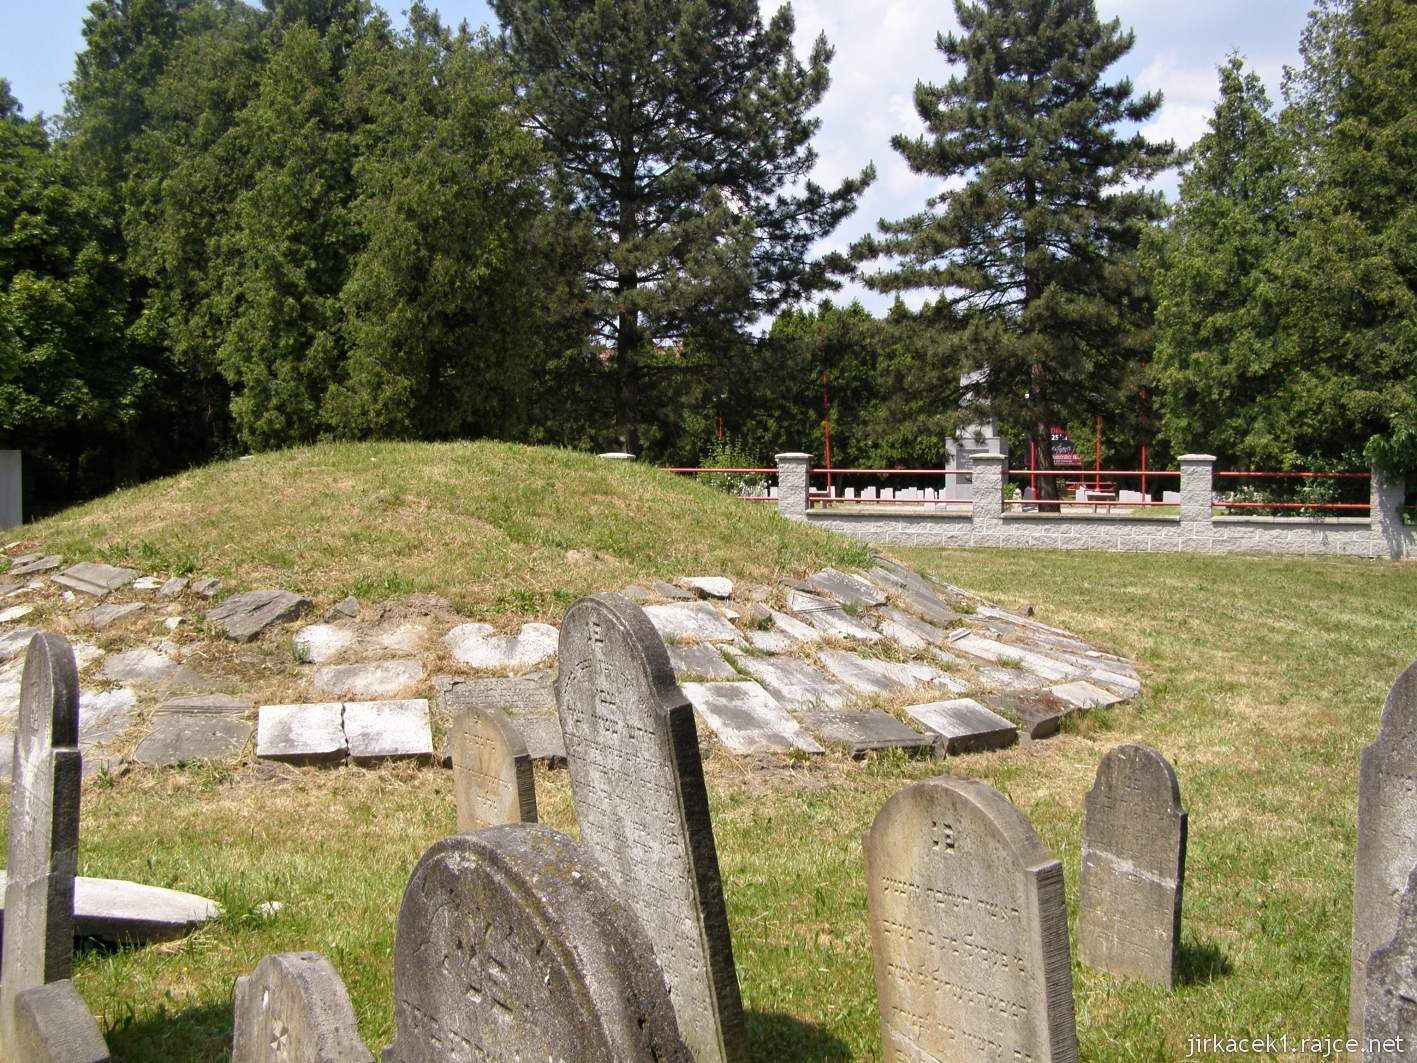 08 - Hlučín - bývalý židovský hřbitov 09 - obnovené náhrobky, mohyla a vzadu hřbitov sovětských vojáků